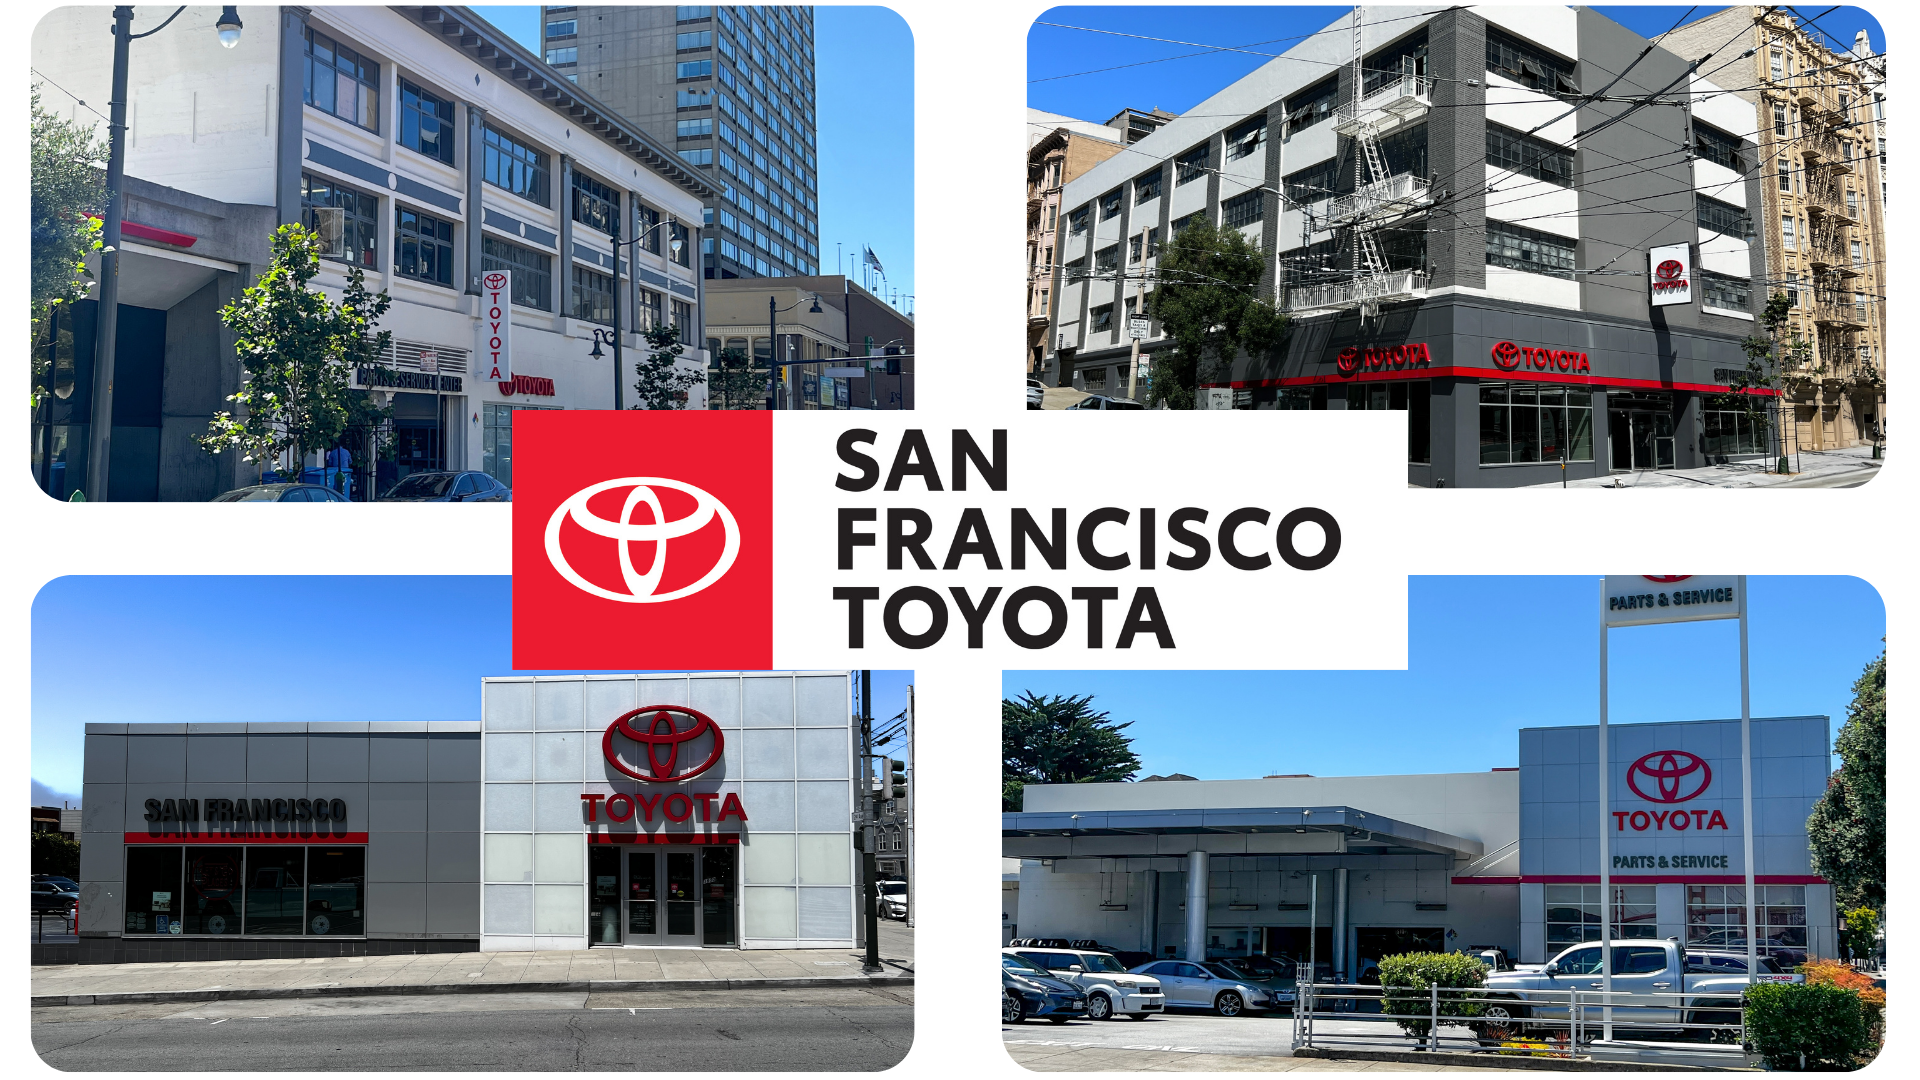 Why buy at San Francisco Toyota?